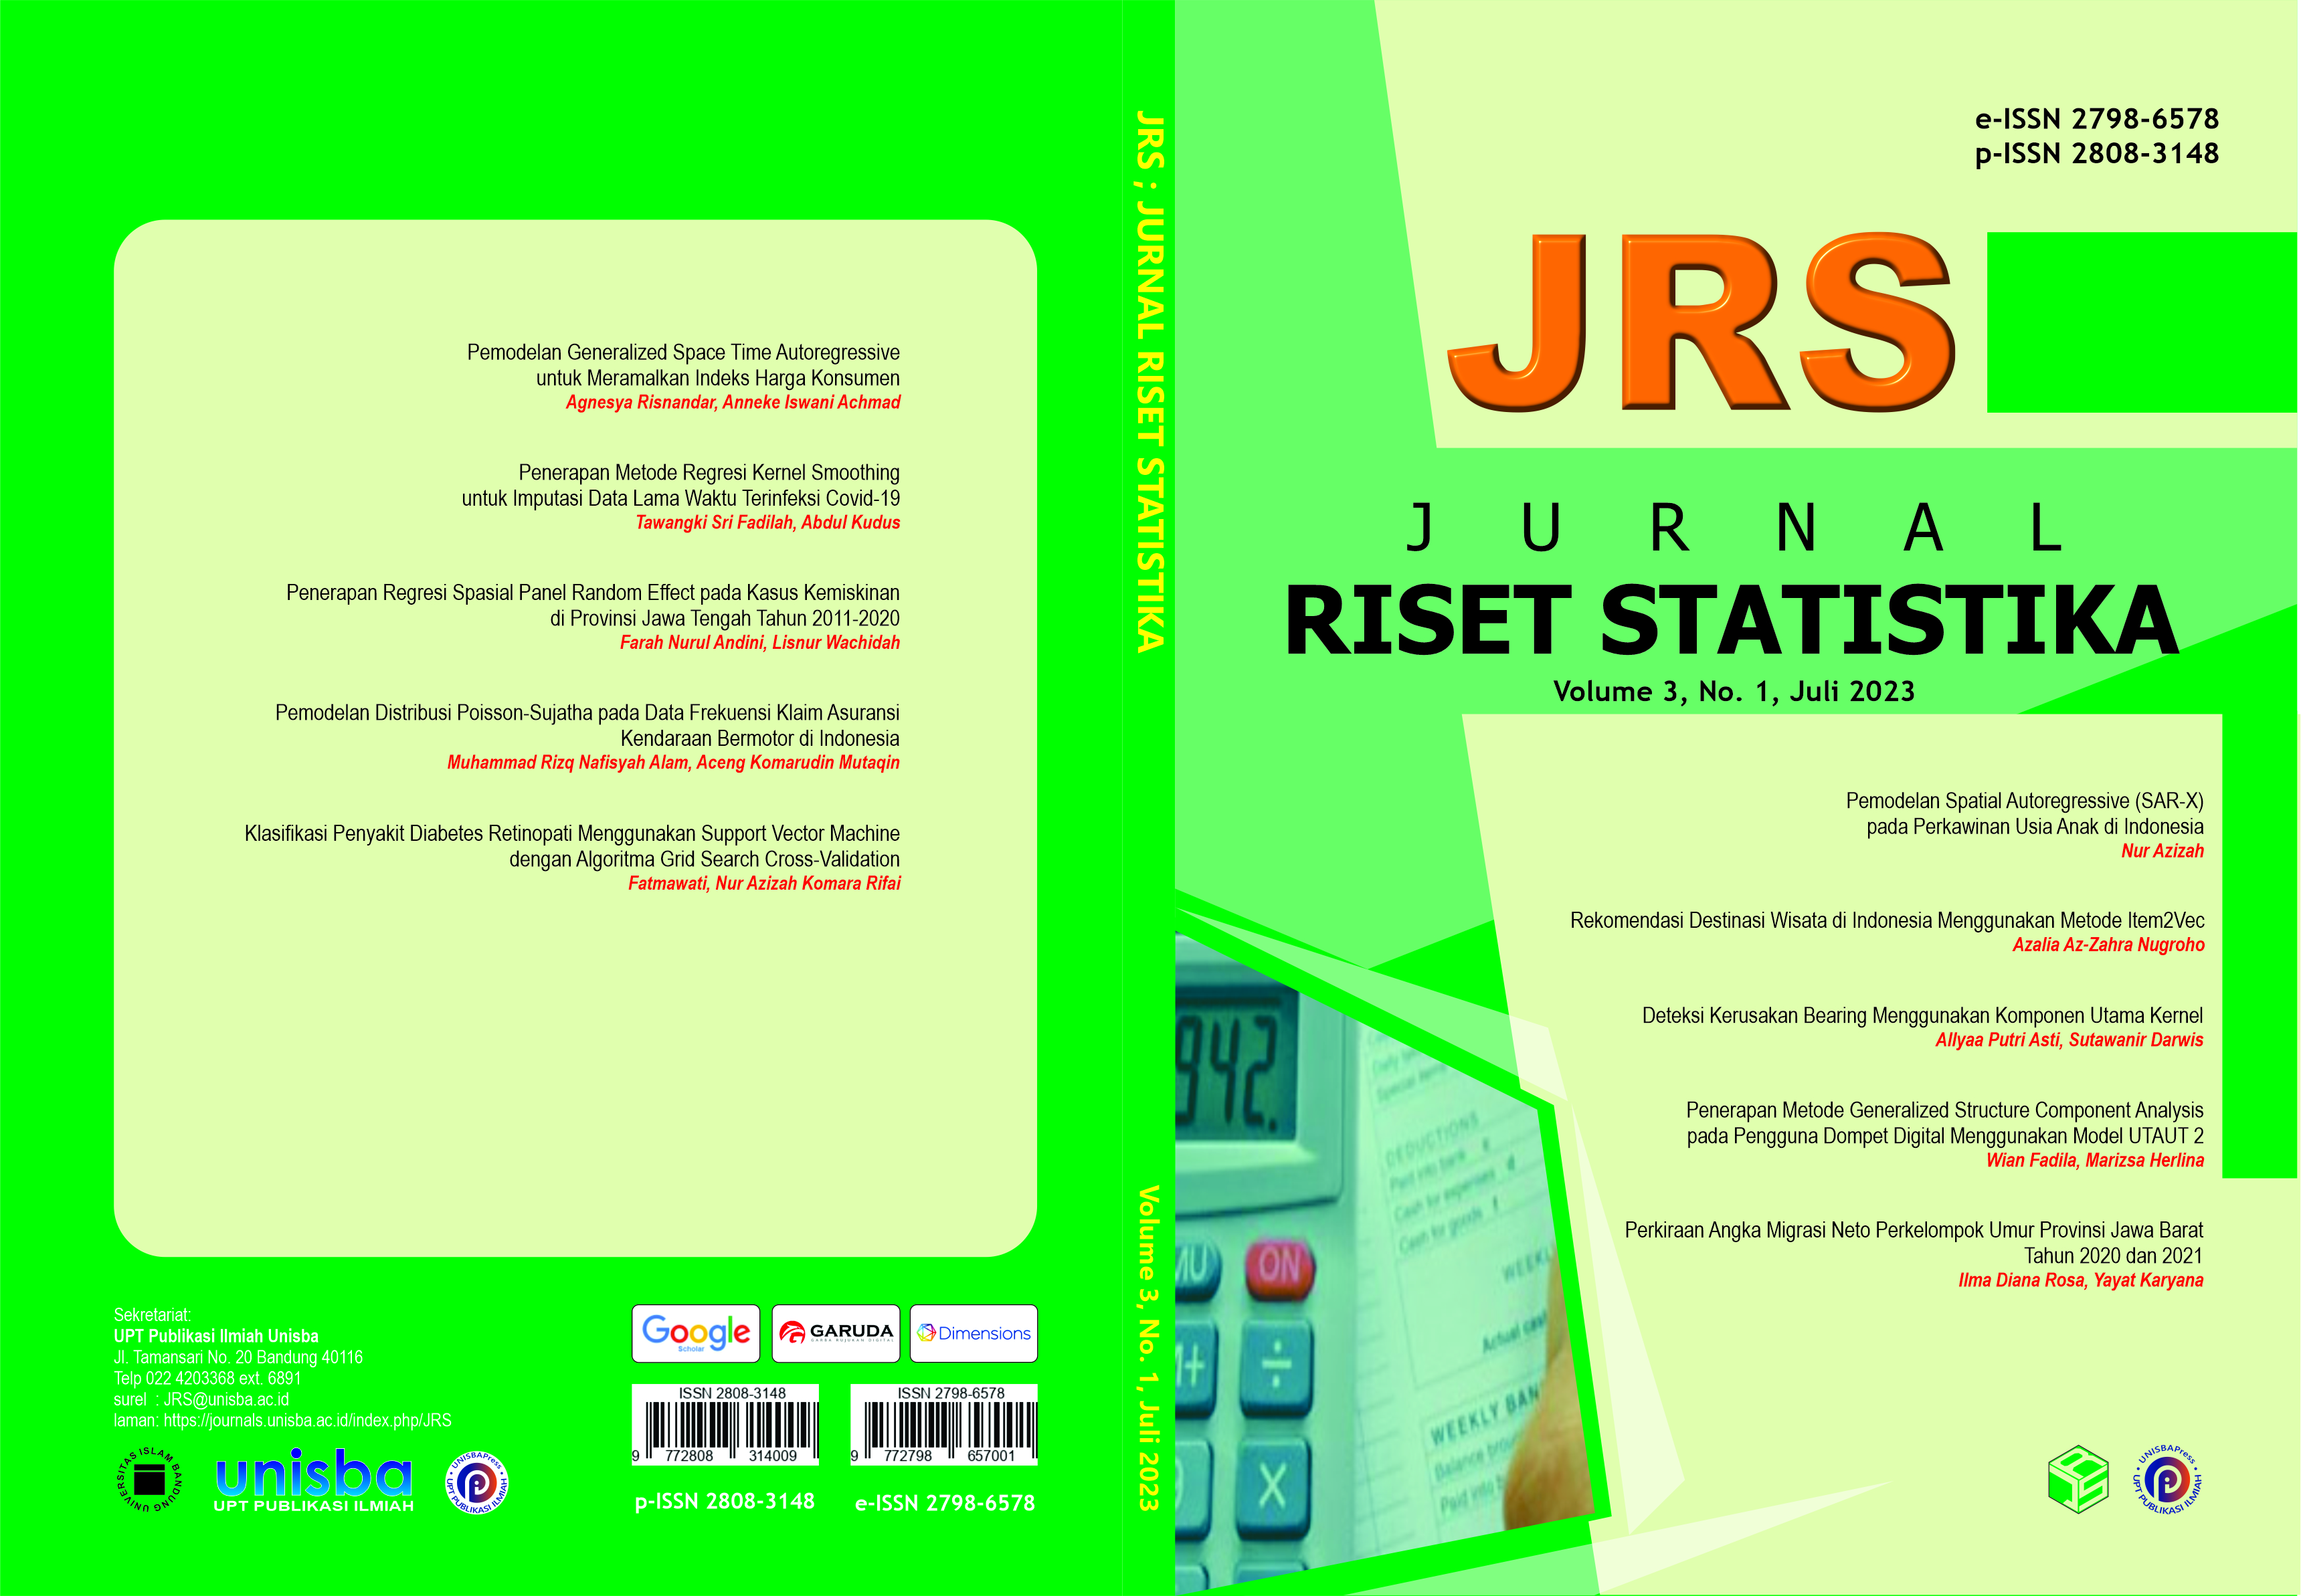 					View Volume 3, No. 1, Juli 2023, Jurnal Riset Statistika (JRS)
				